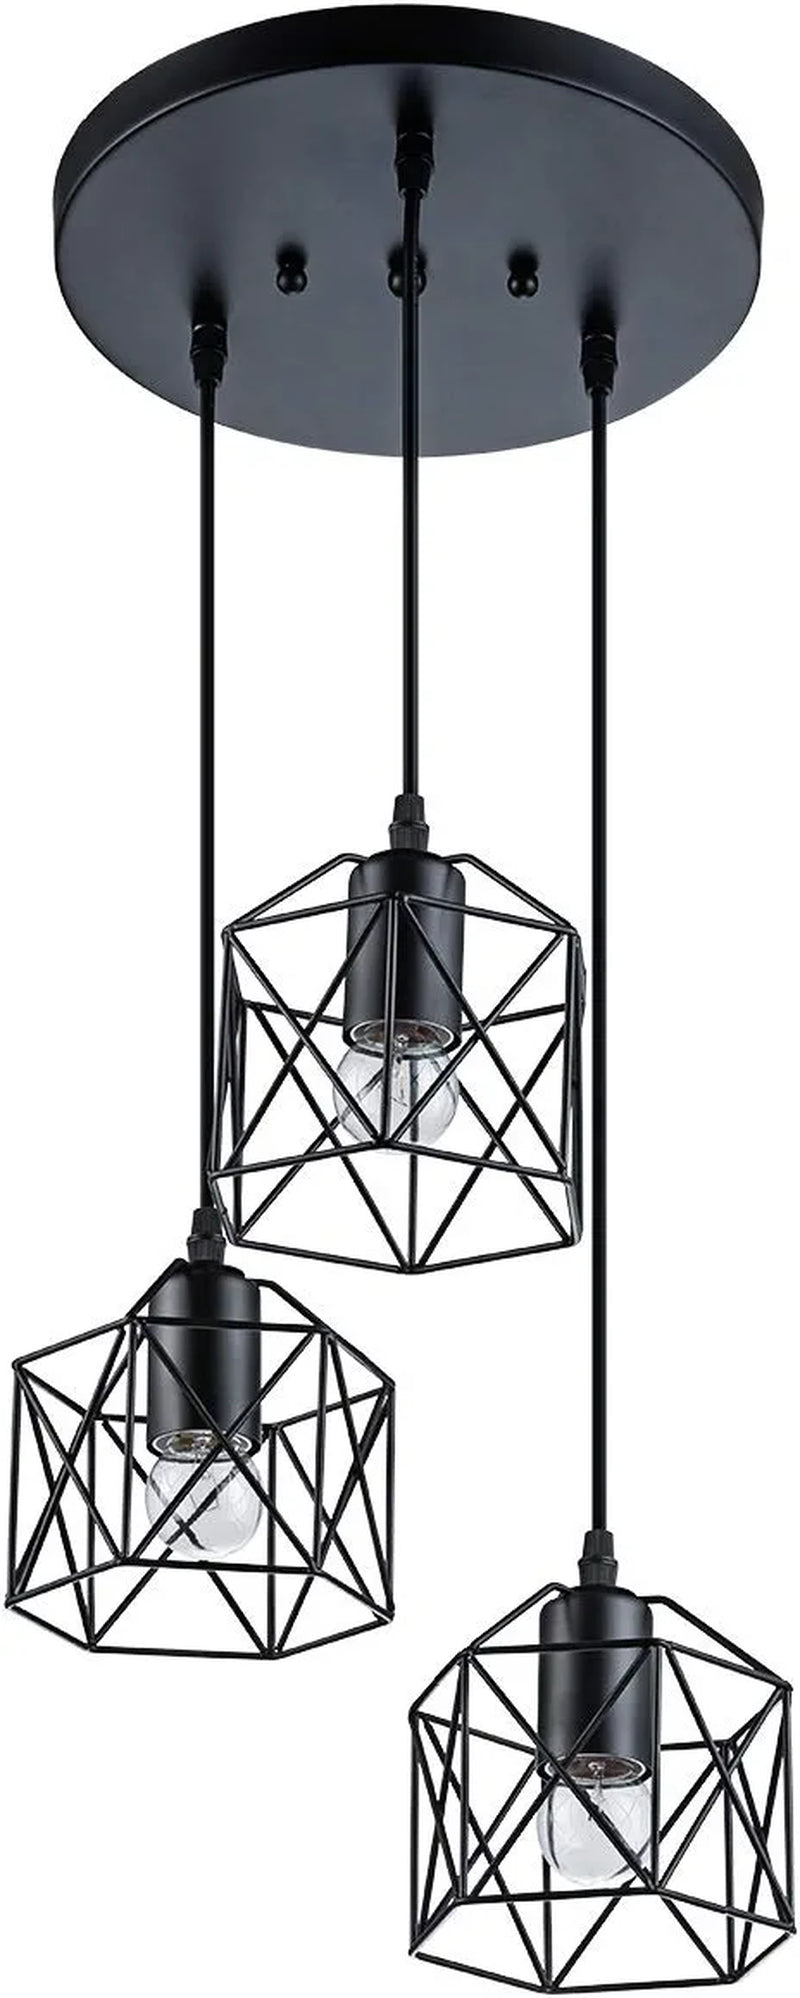 VILUXY Industrial 3-Light Pendant Lighting, with Black Metal Cage Shade, Adjustable Pendant Light for Kitchen Living Room Bedroom Hallway or Bar